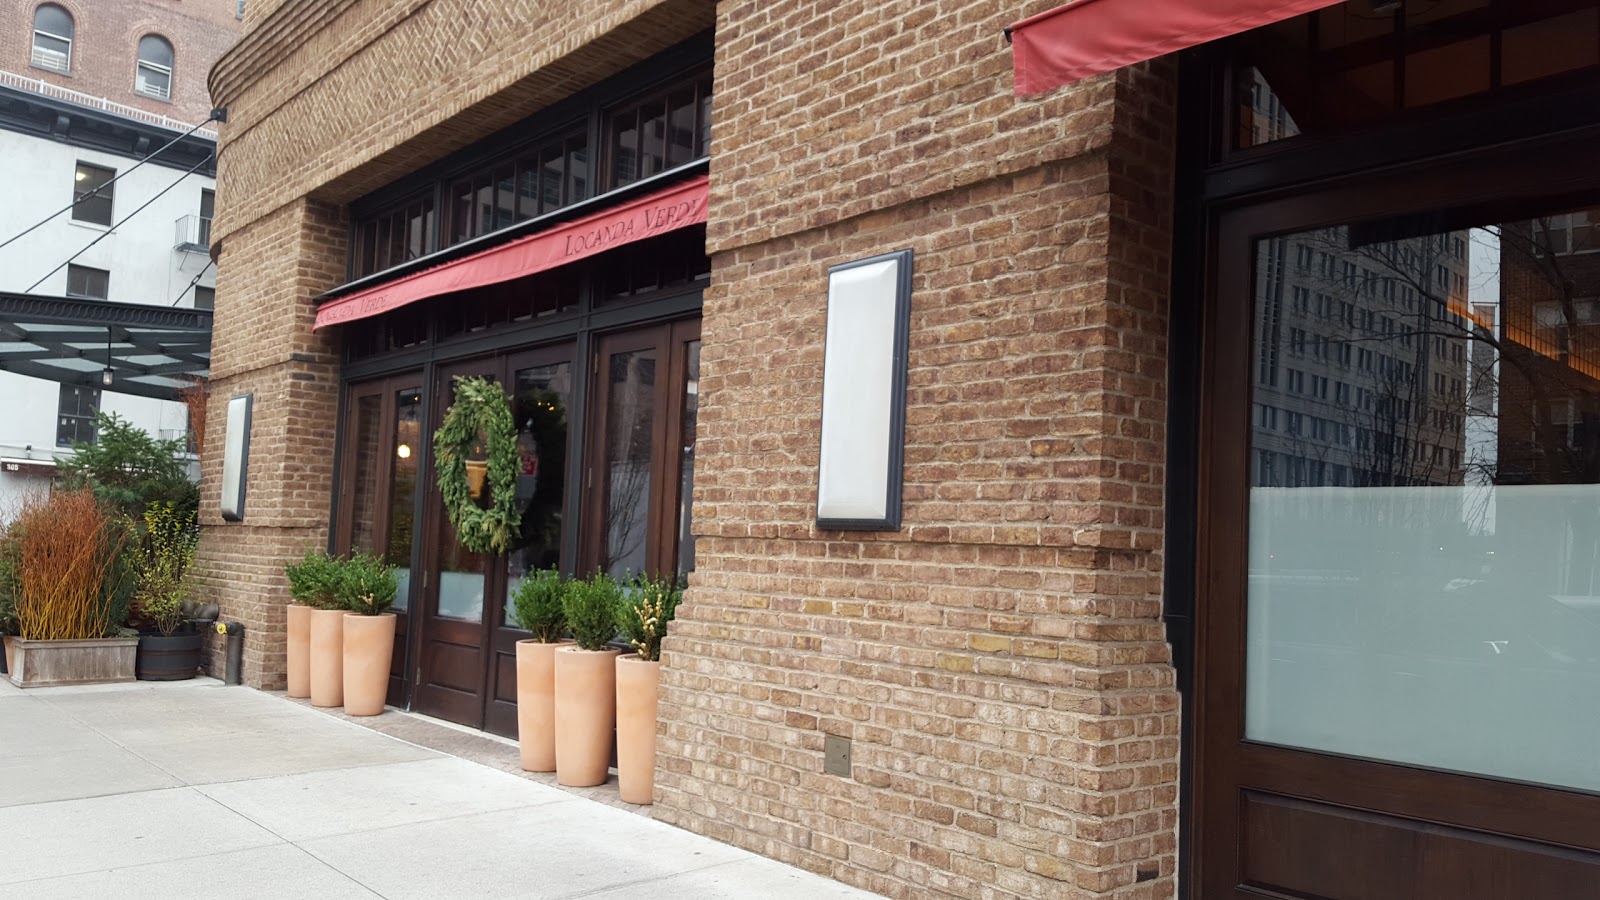 Photo of Locanda Verde in New York City, New York, United States - 2 Picture of Restaurant, Food, Point of interest, Establishment, Bar